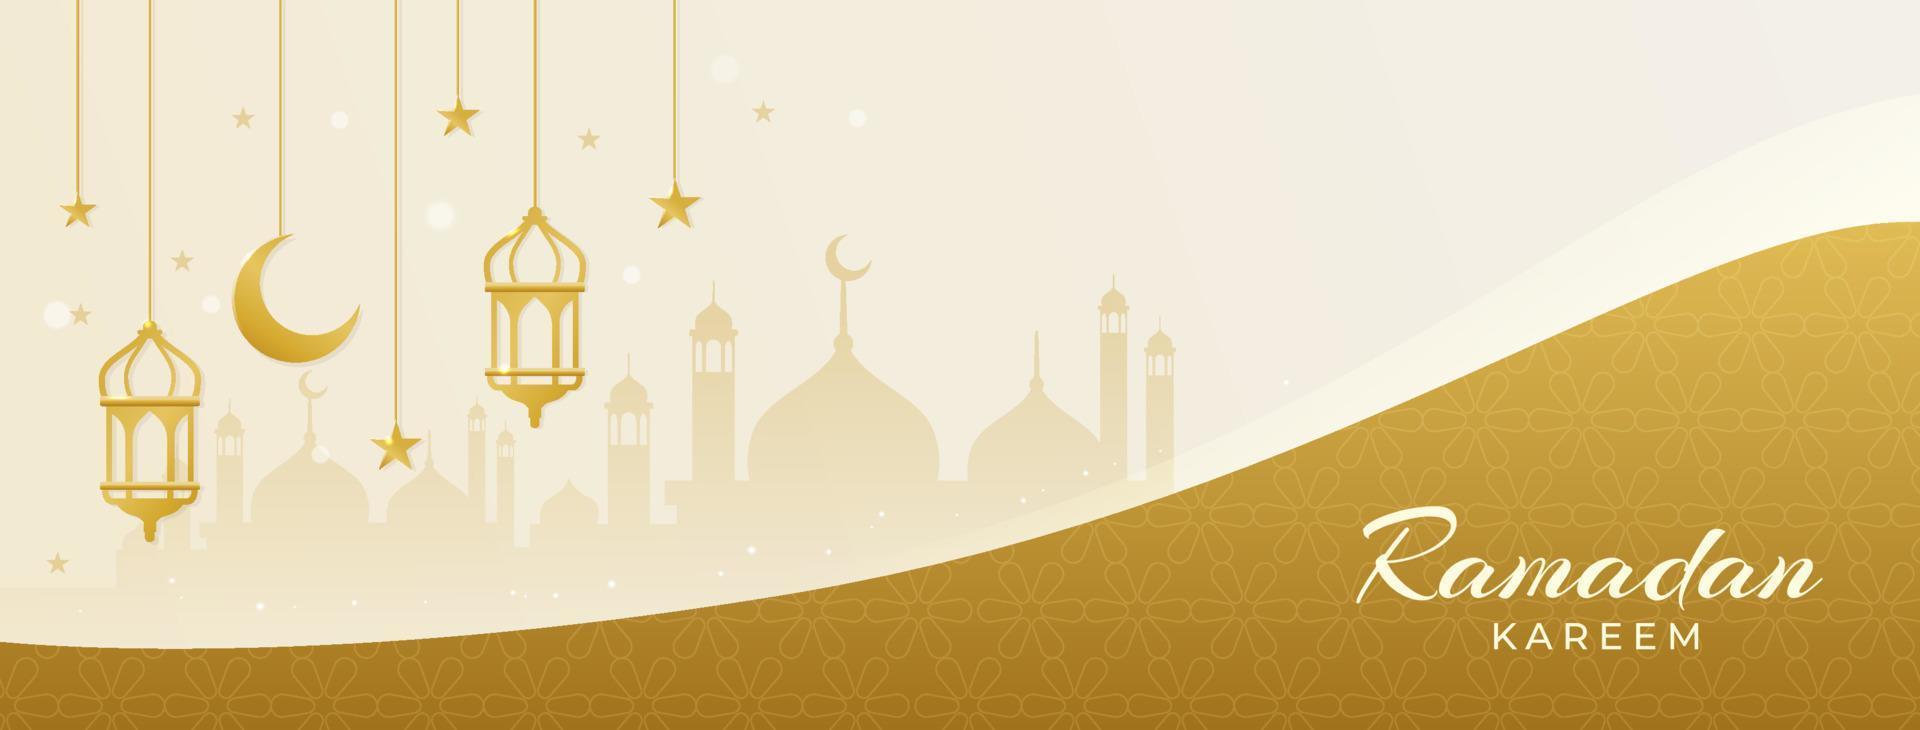 Ramadan kareem islamisch horizontal Banner vektor